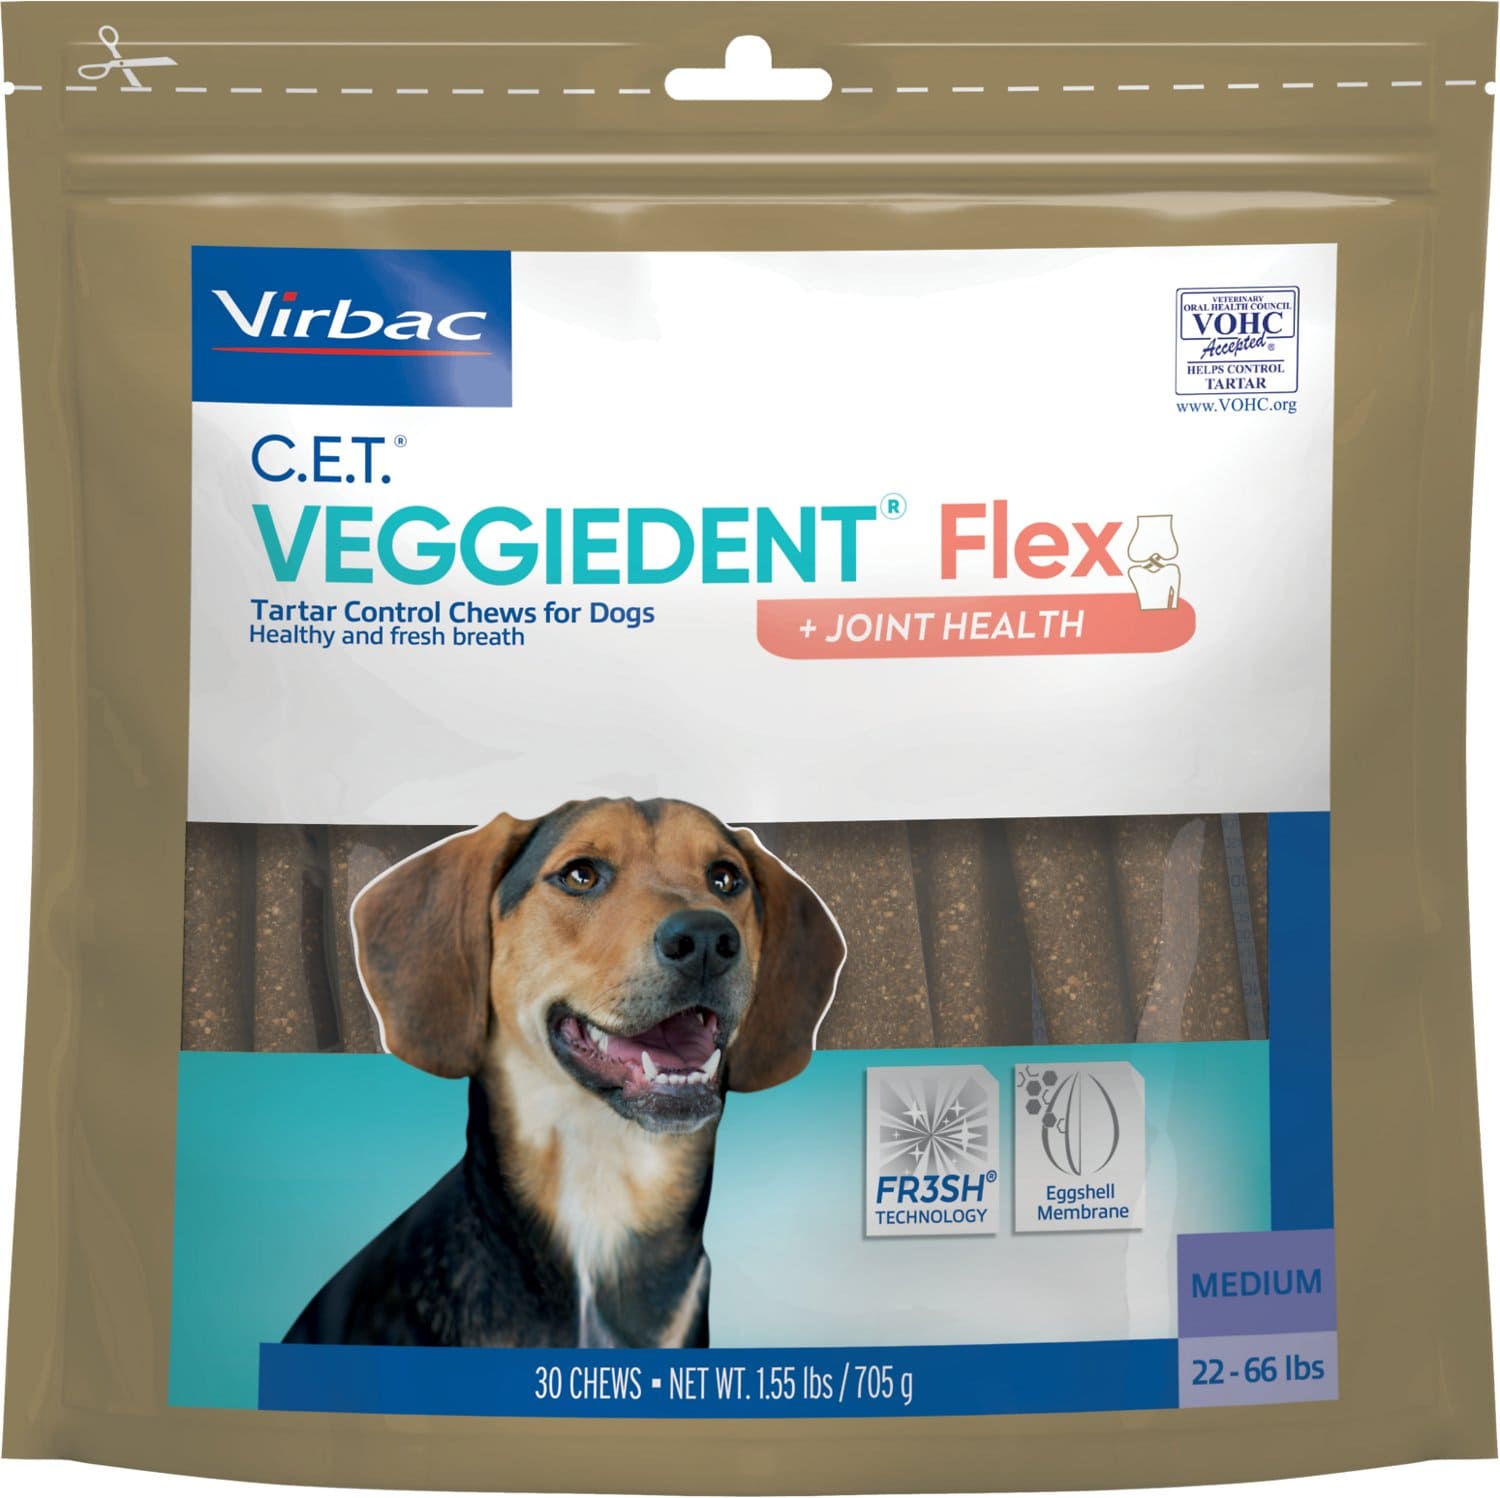 C.E.T. VeggieDent Flex + Joint Health 30 chews for medium dogs 22-66 lbs 1